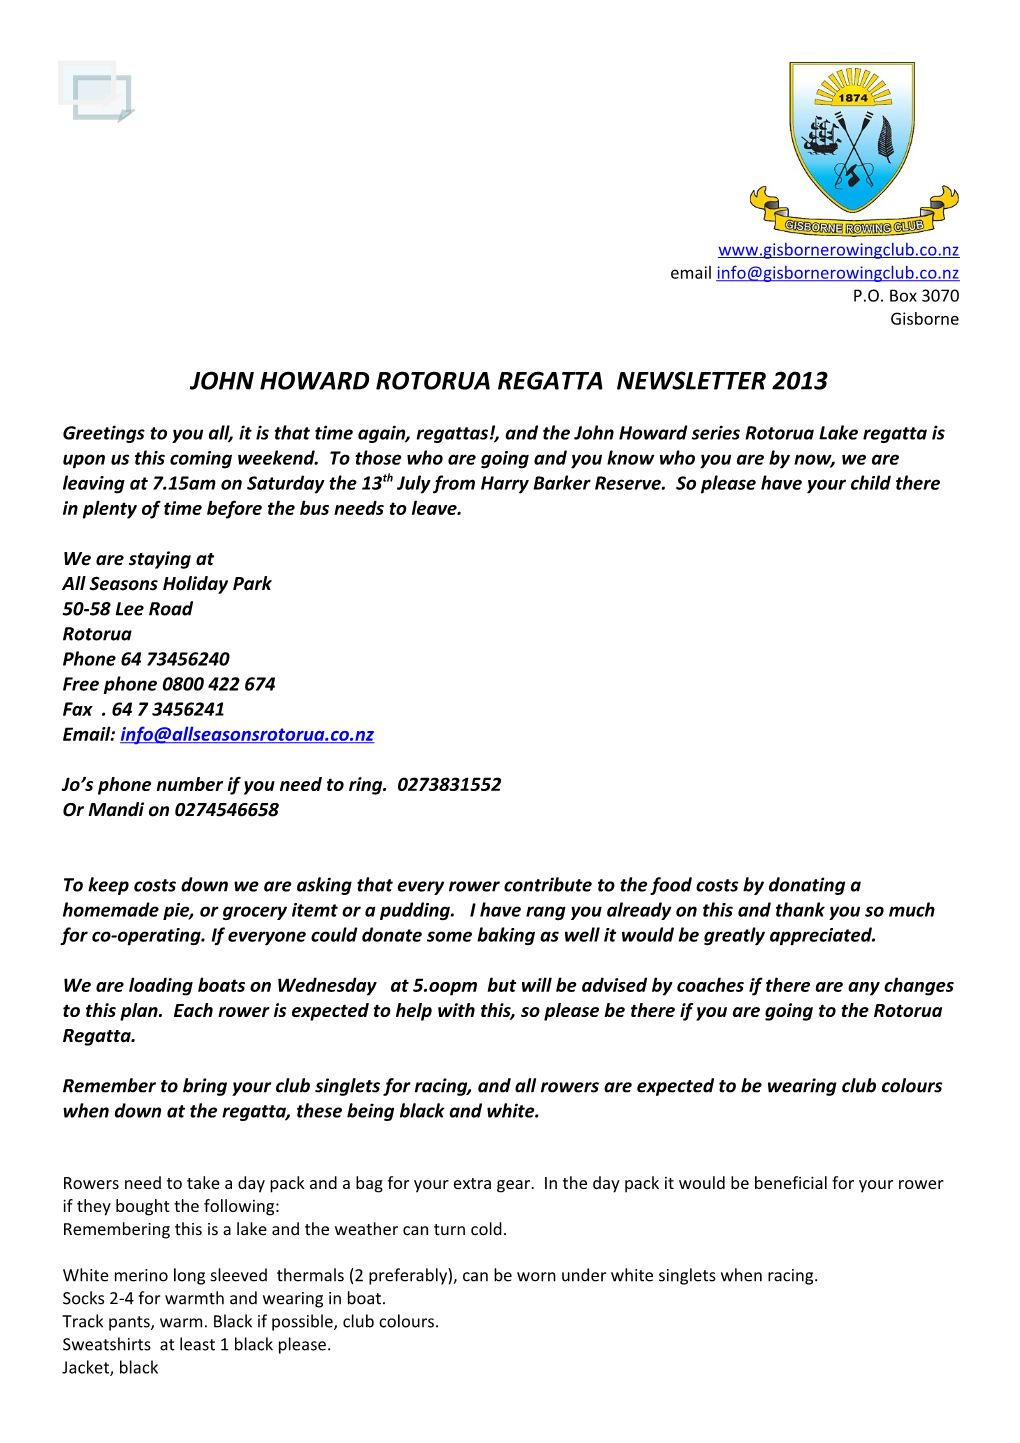 John Howard Rotorua Regatta Newsletter 2013